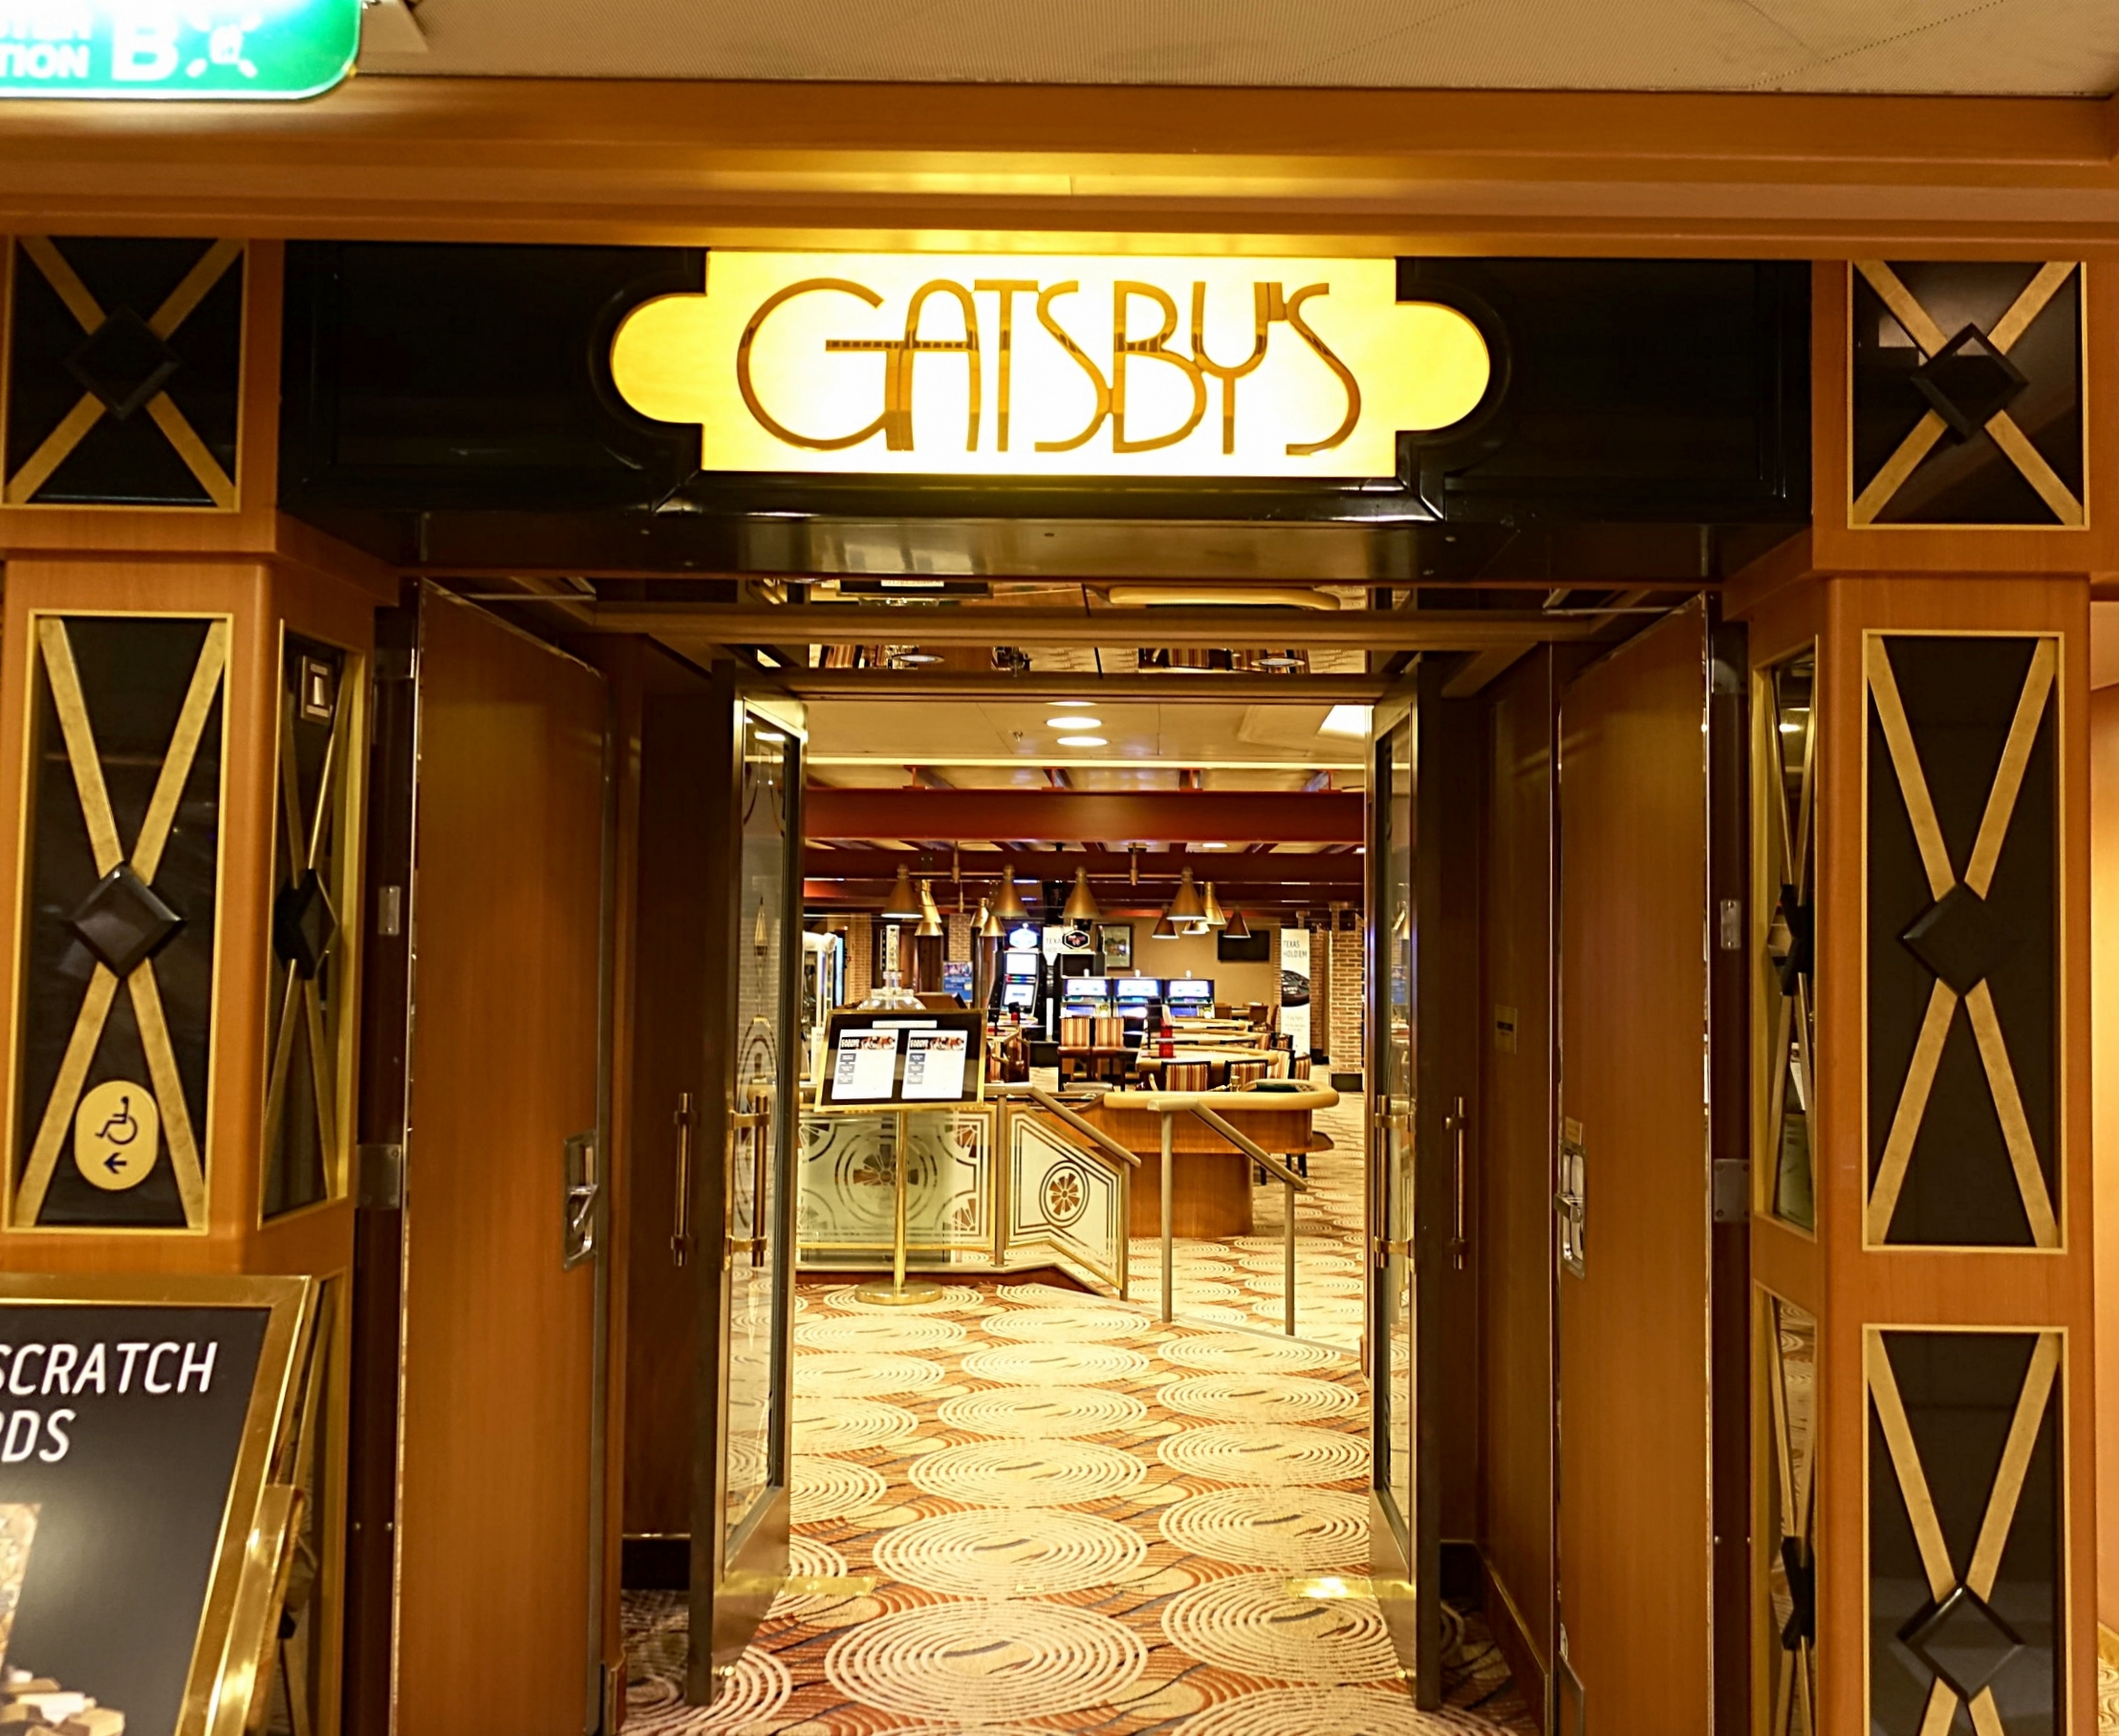  Gatsby’s casino.  